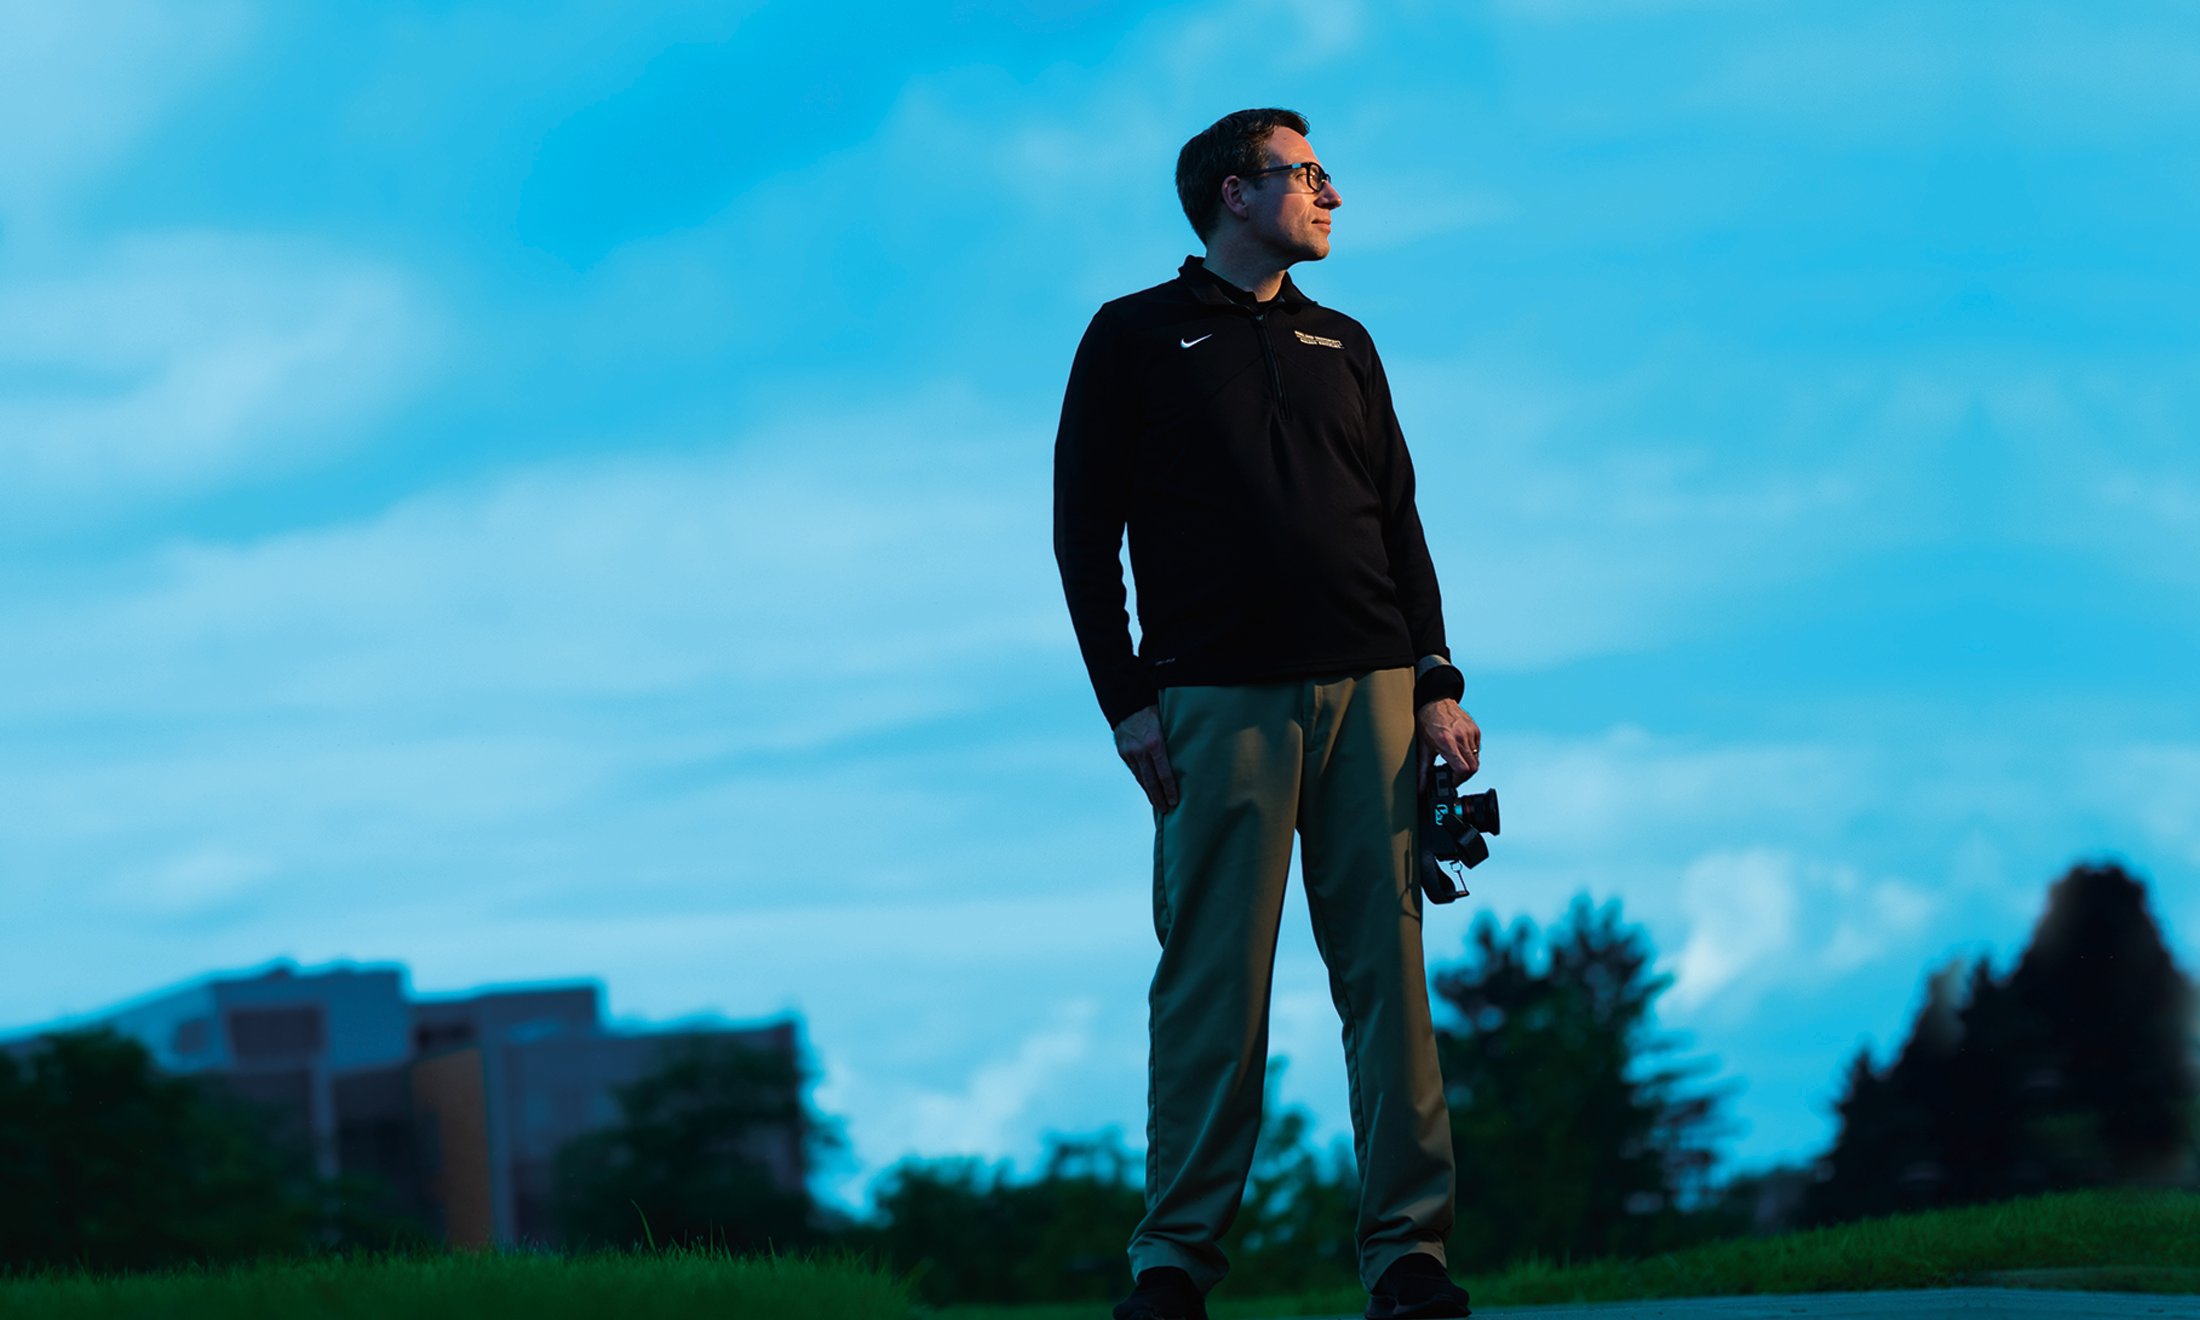 Staff member Matt Boltz standing on campus with a camera